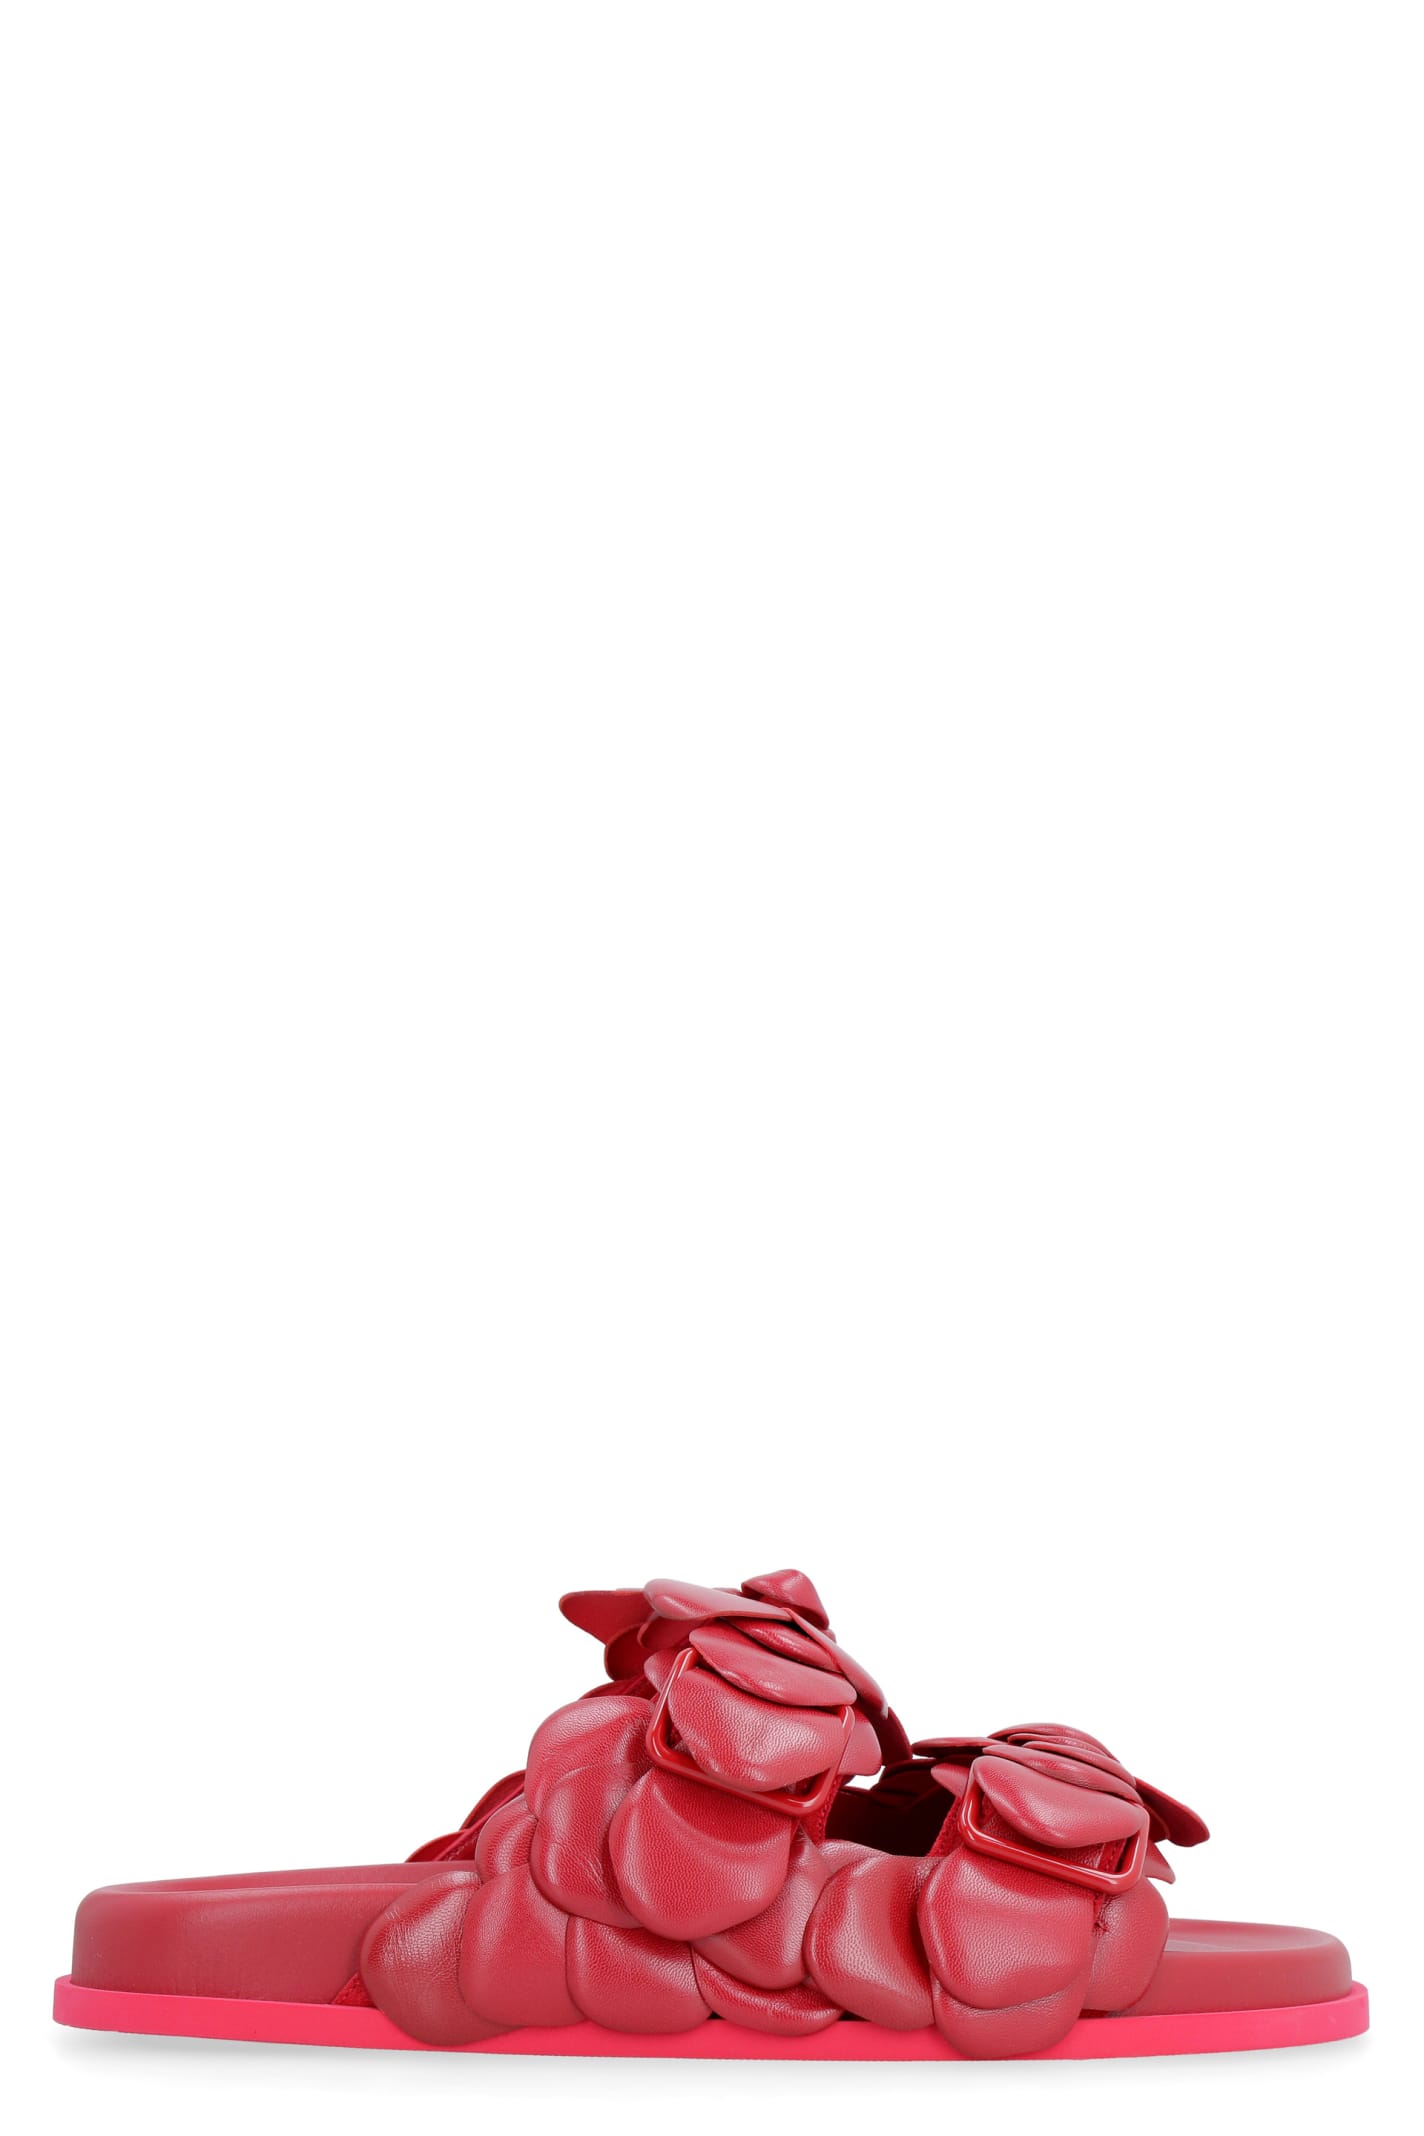 Valentino Valentino Garavani - Atelier Shoes 03 Rose Edition Leather Slides